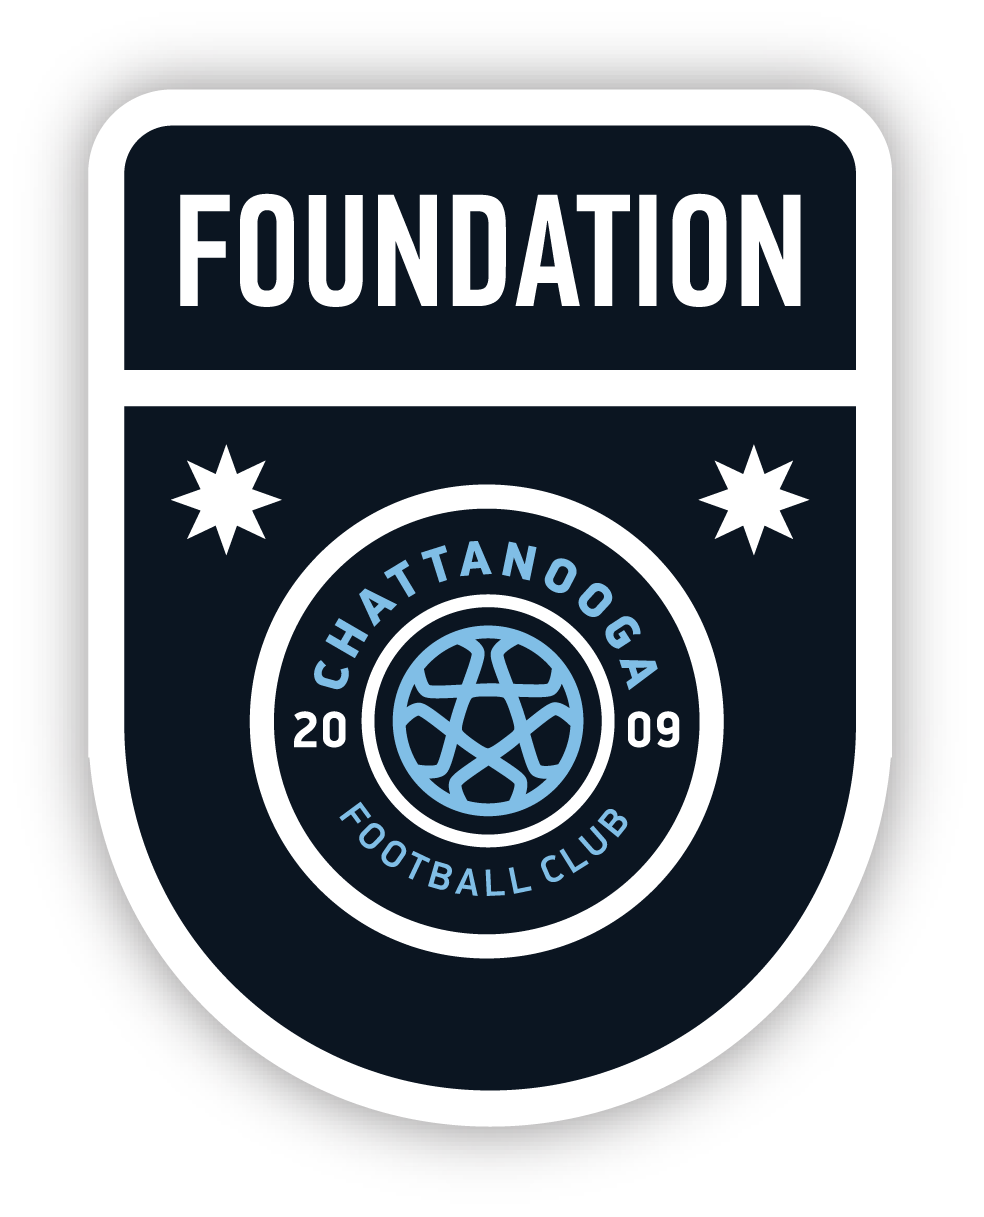 Chattanooga Football Club Foundation